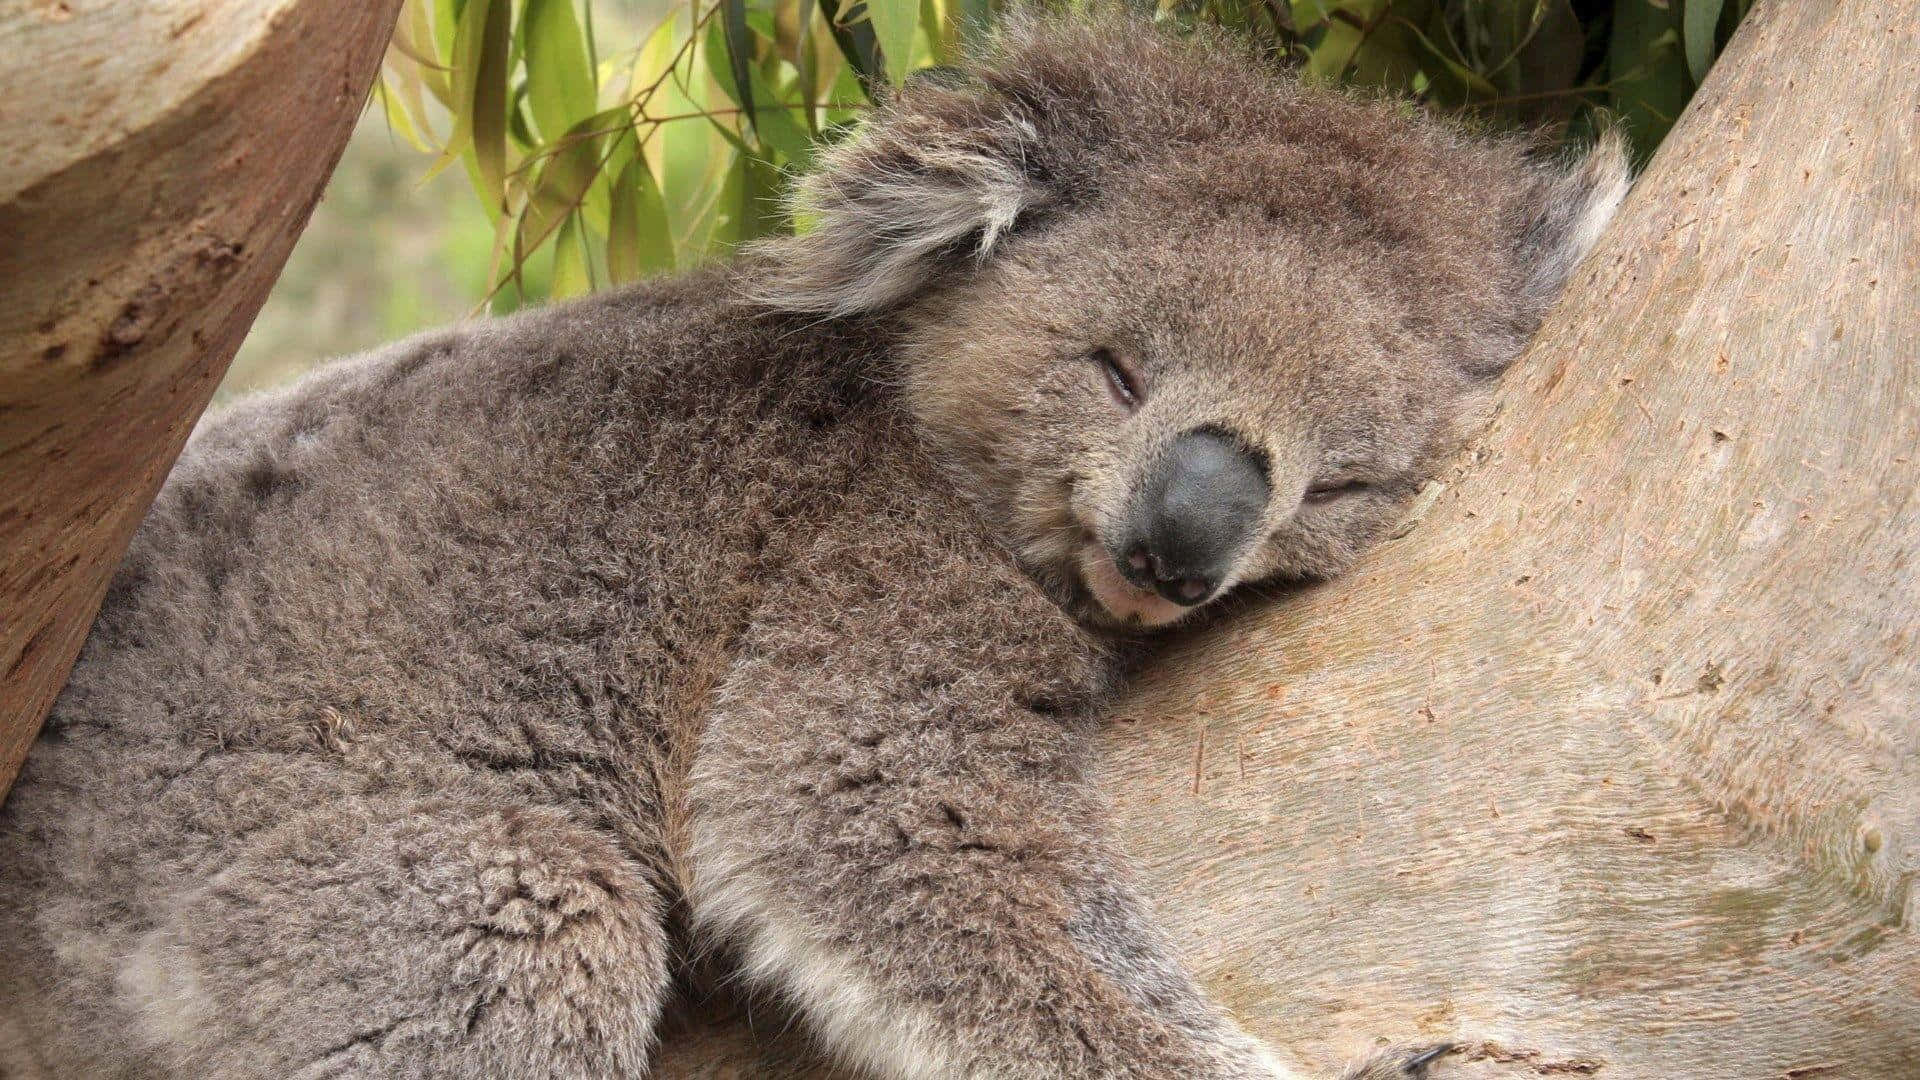 A koala resting in its natural habitat